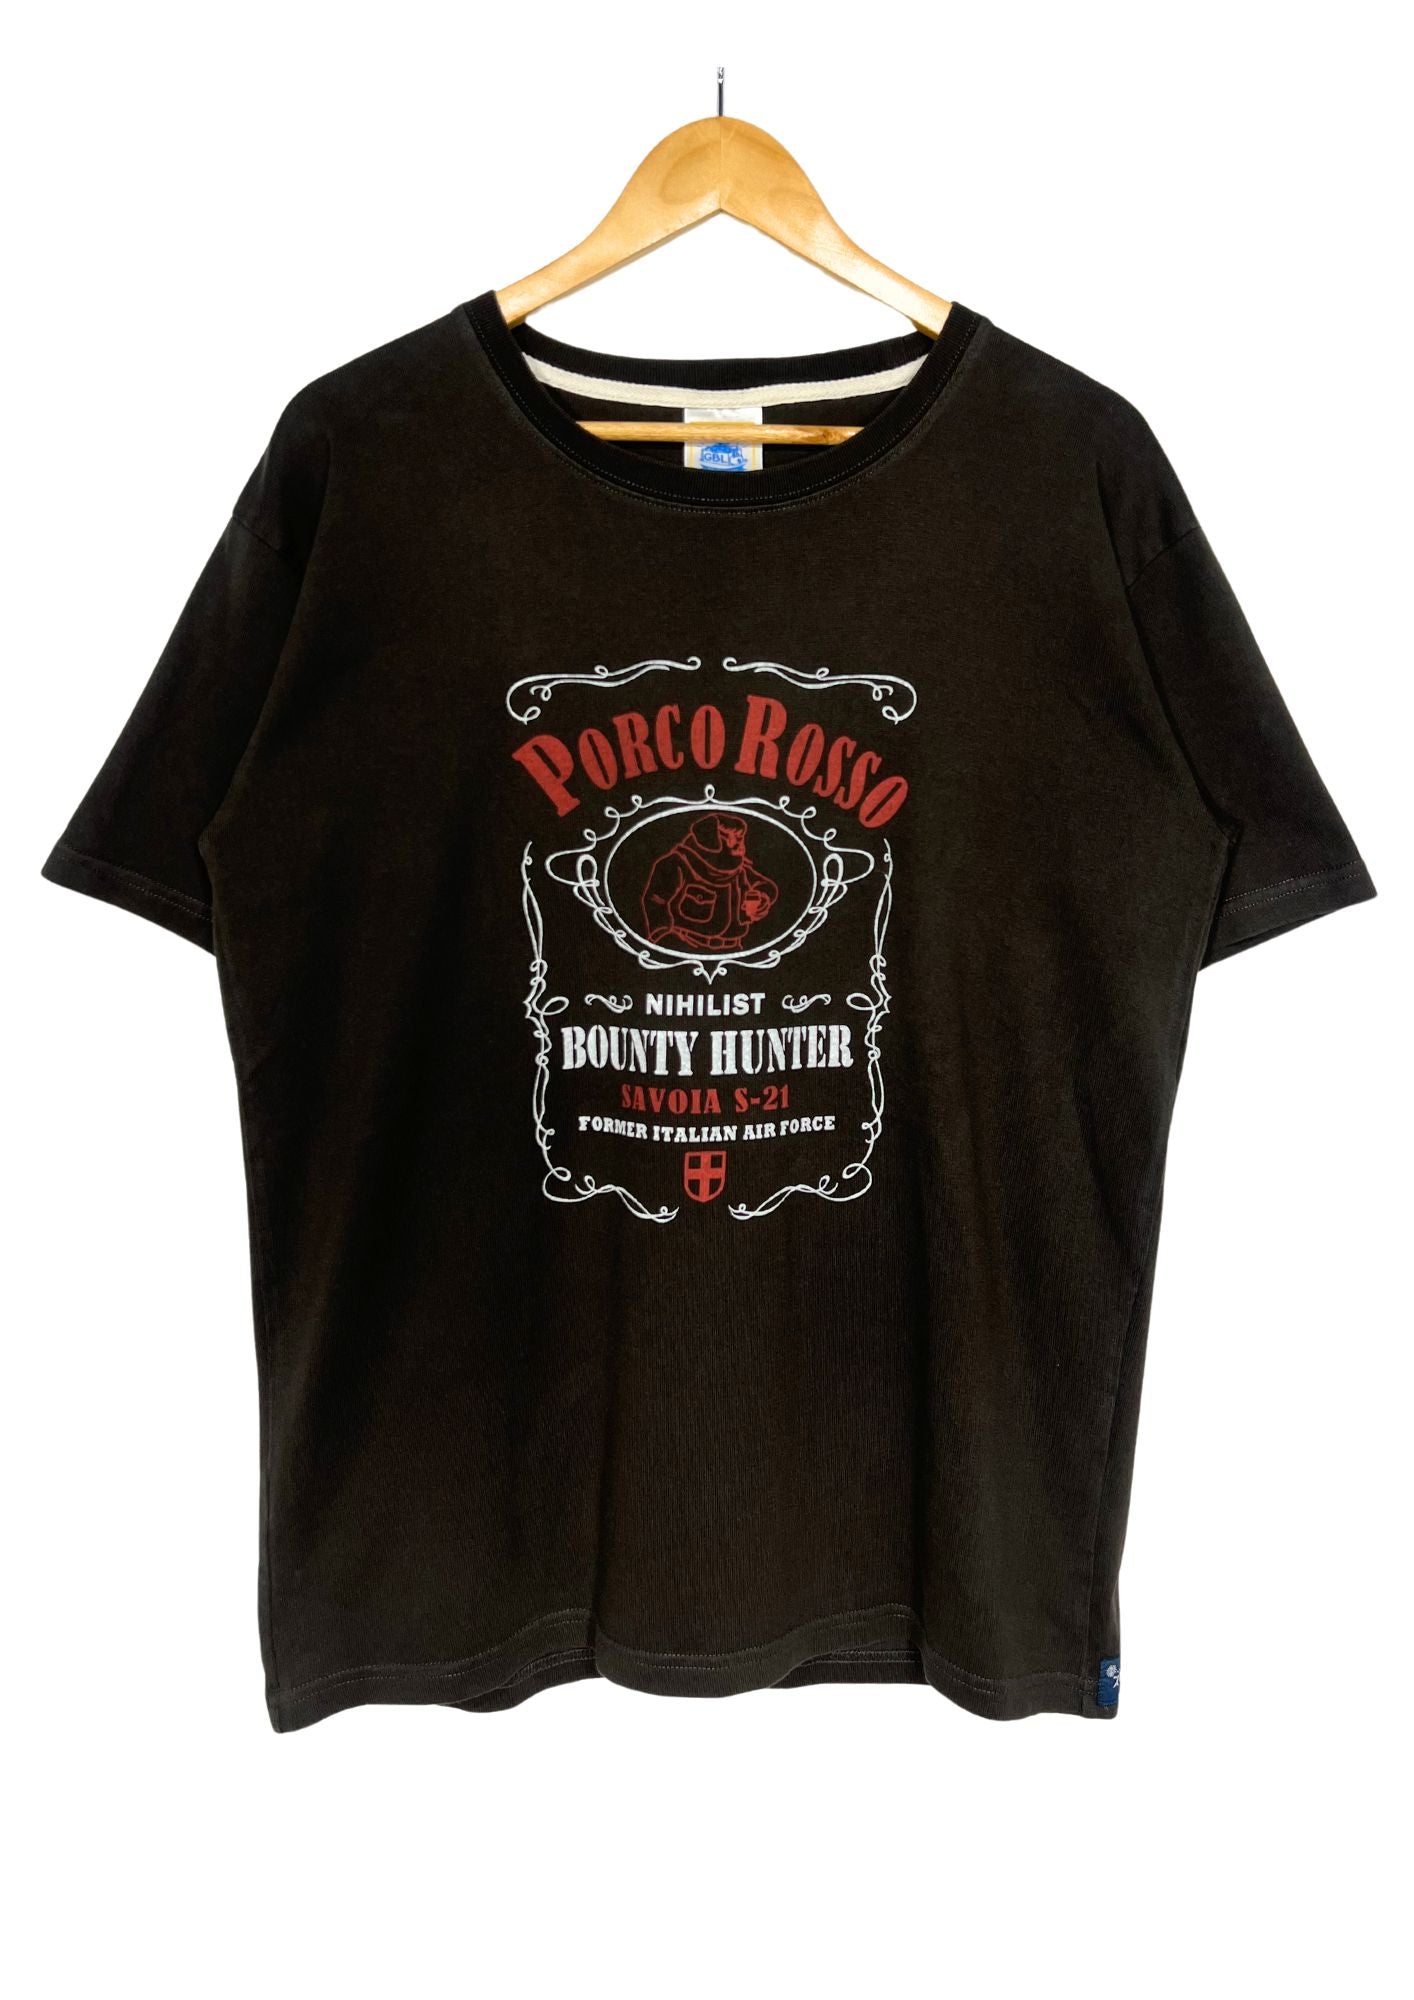 2021 Porco Rosso x GBL Bounty Hunter T-shirt